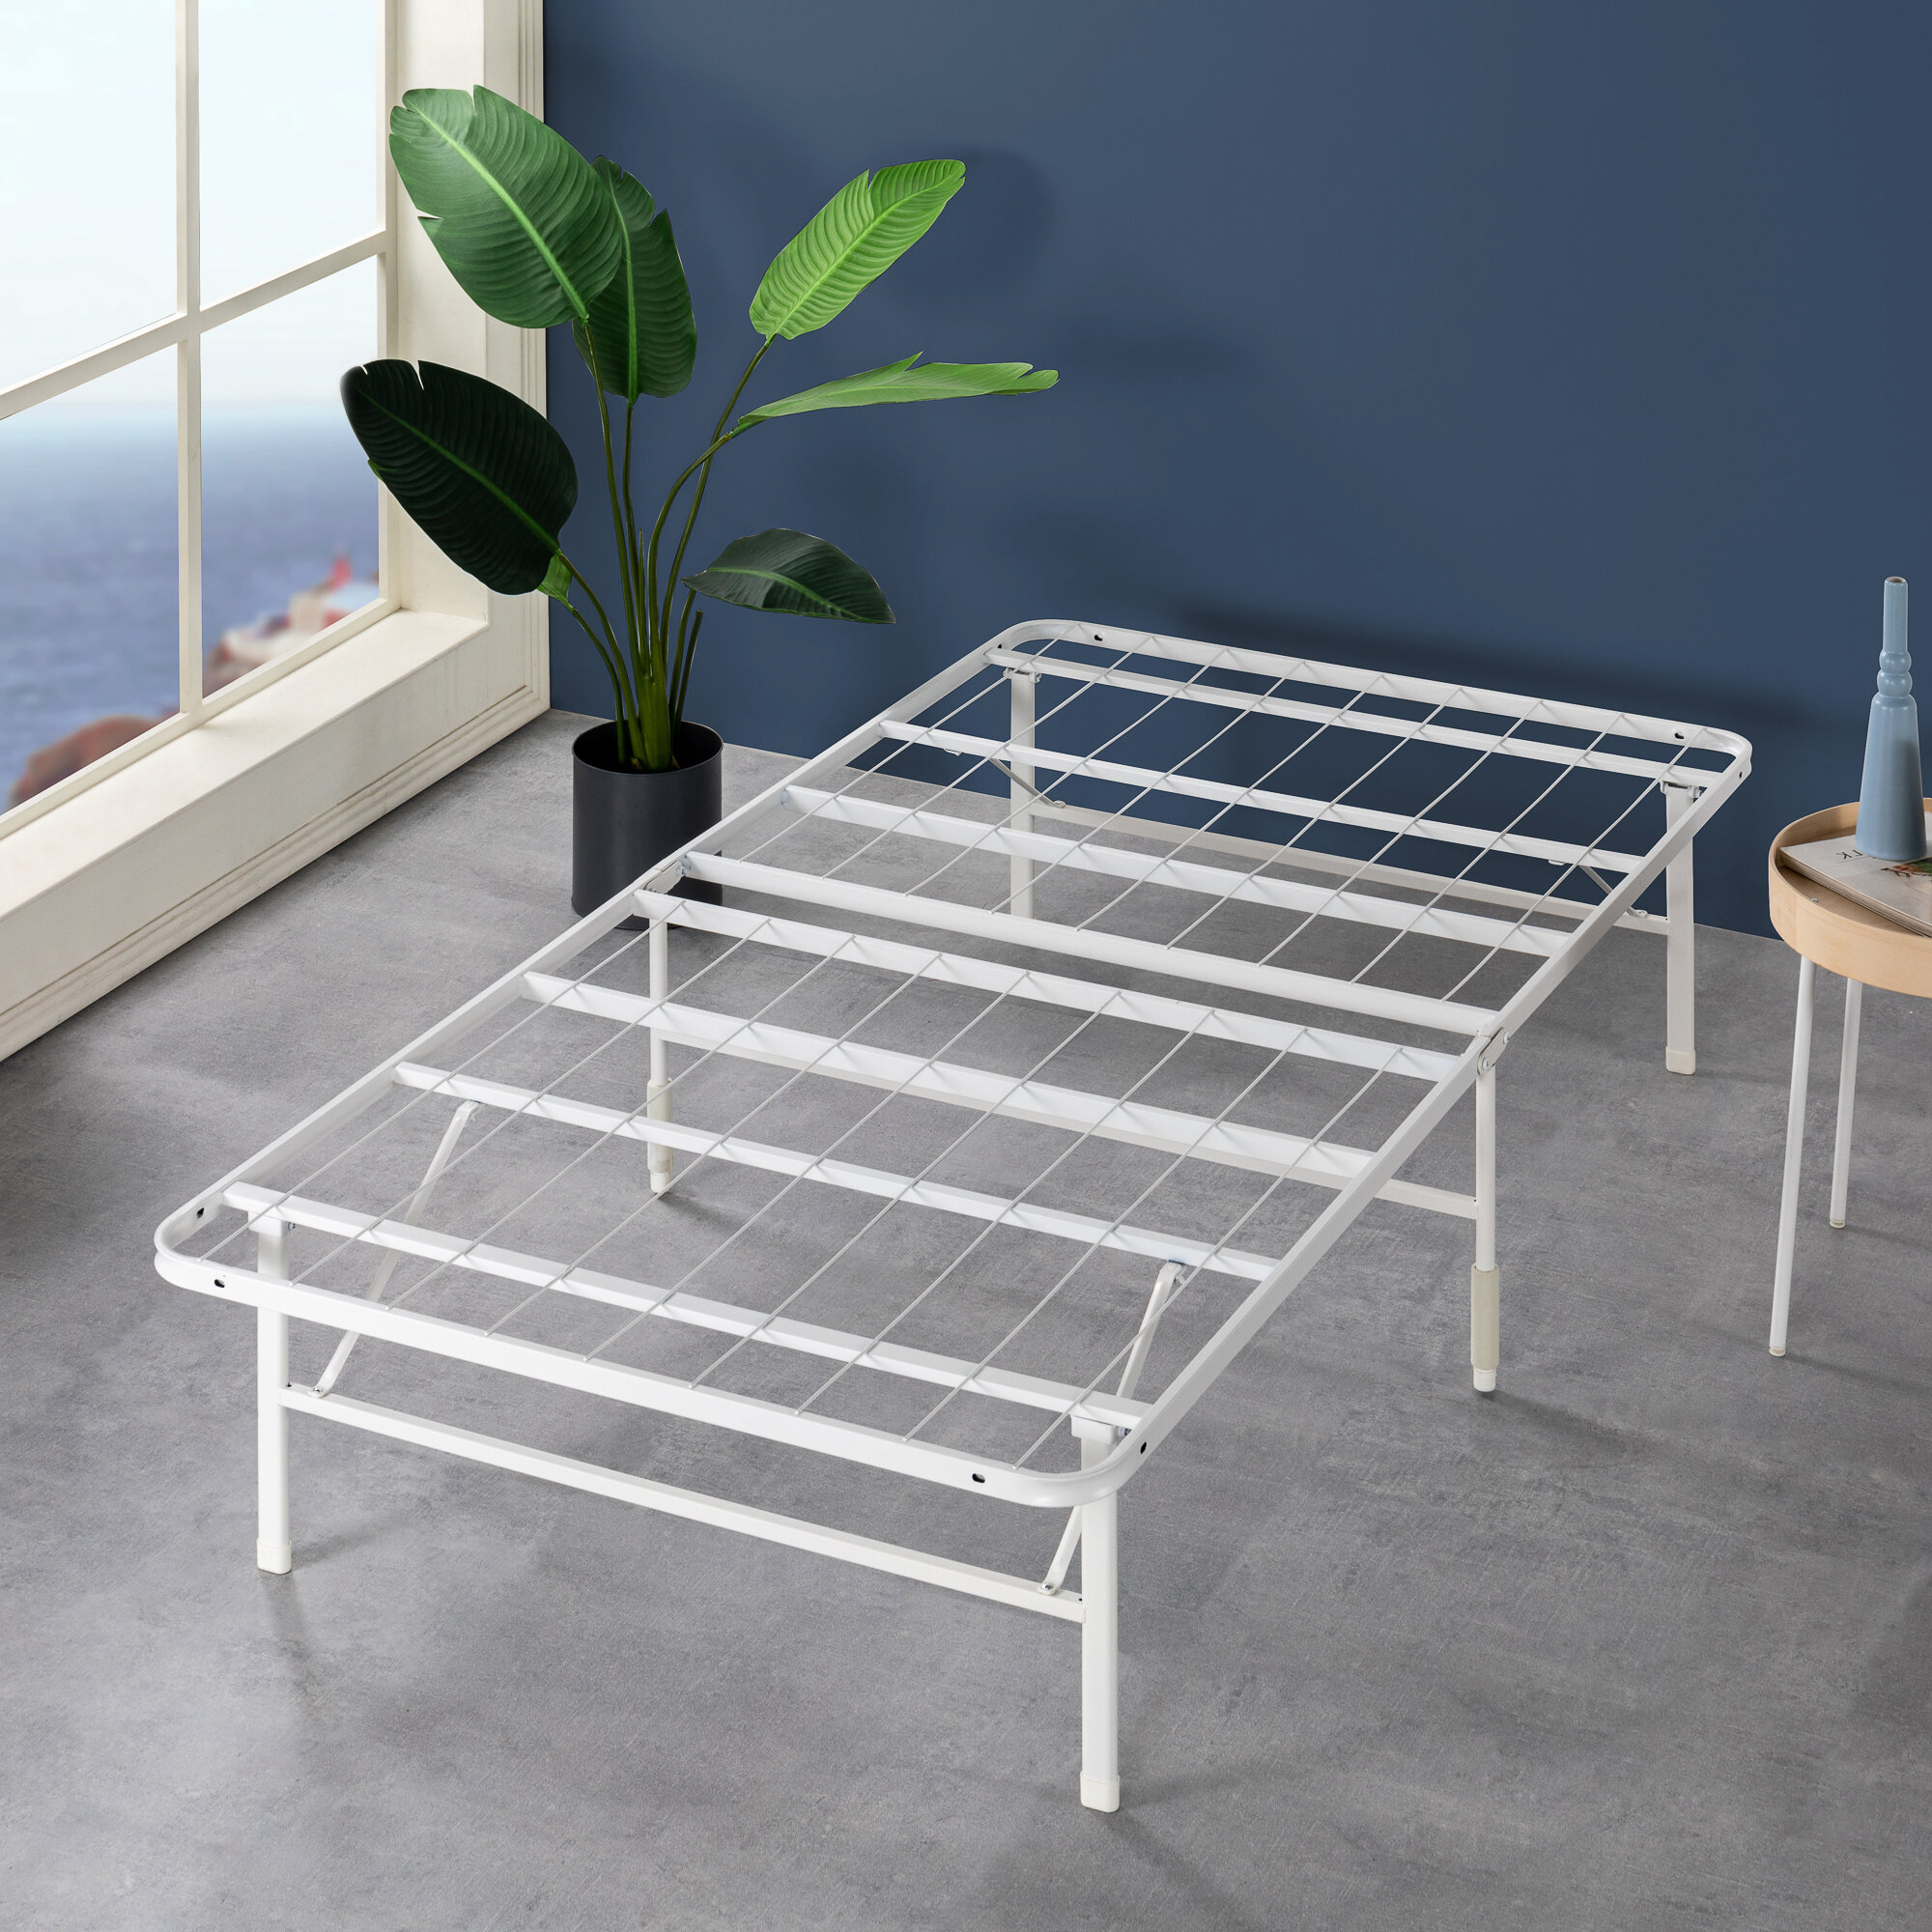 14" Steel Bed Frame Foldable Platform Mattress Bedroom Furniture Twin Queen King 